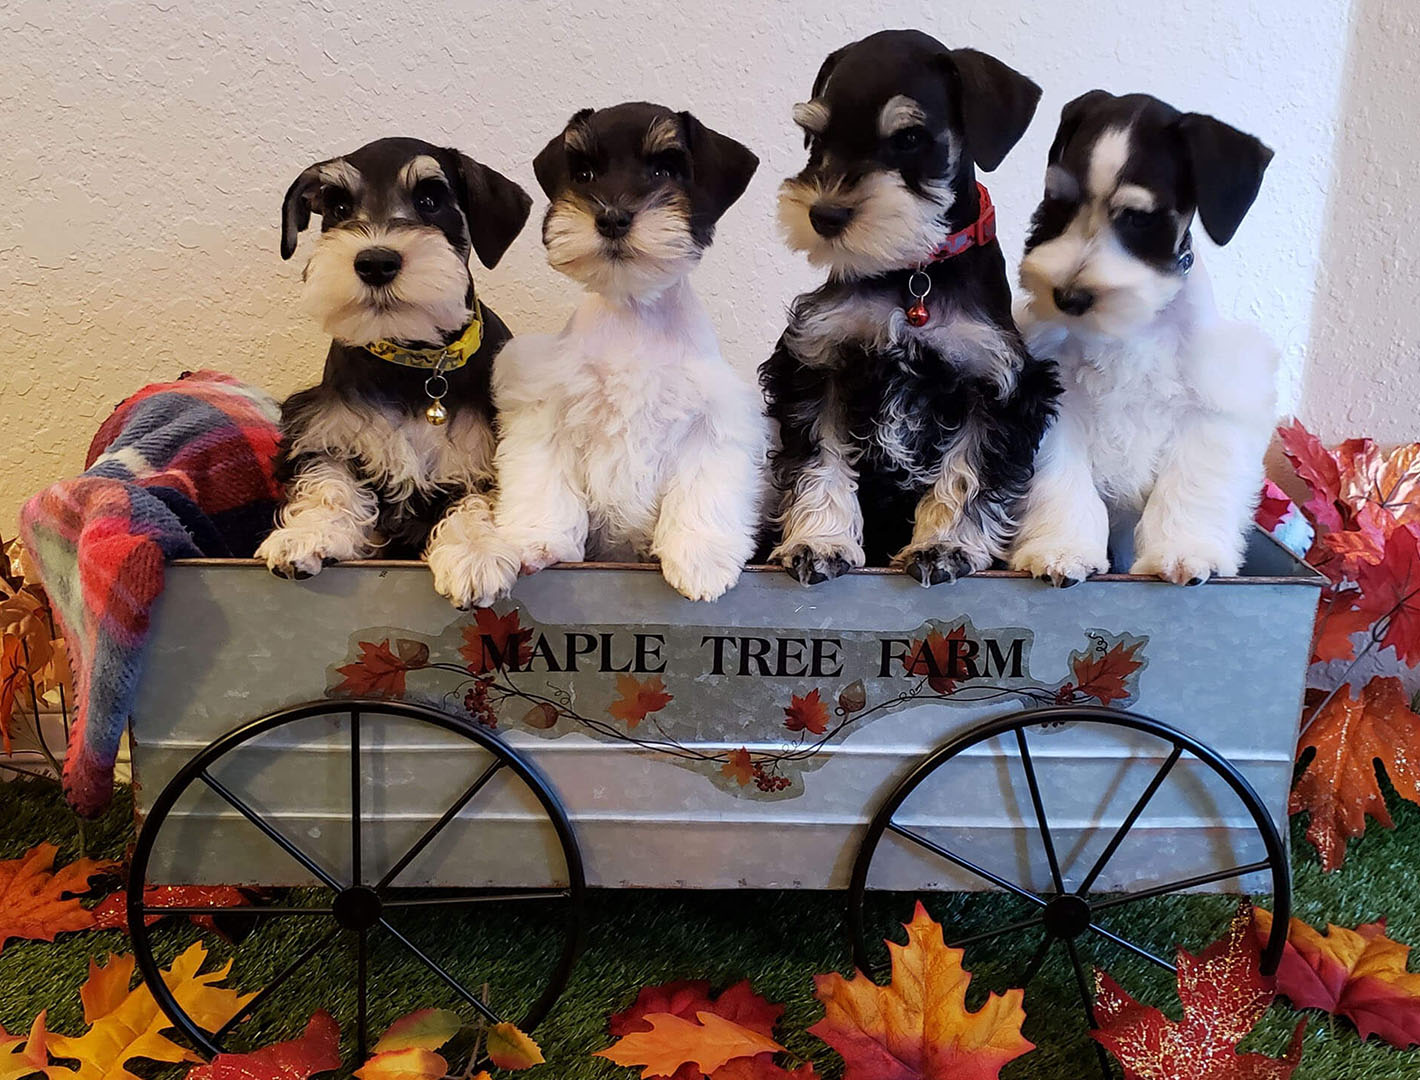 Owasso Miniature Schnauzer Dog Breeder, Miniature Schnauzer Puppies for Sale and Miniature Schnauzer Dogs for Sale